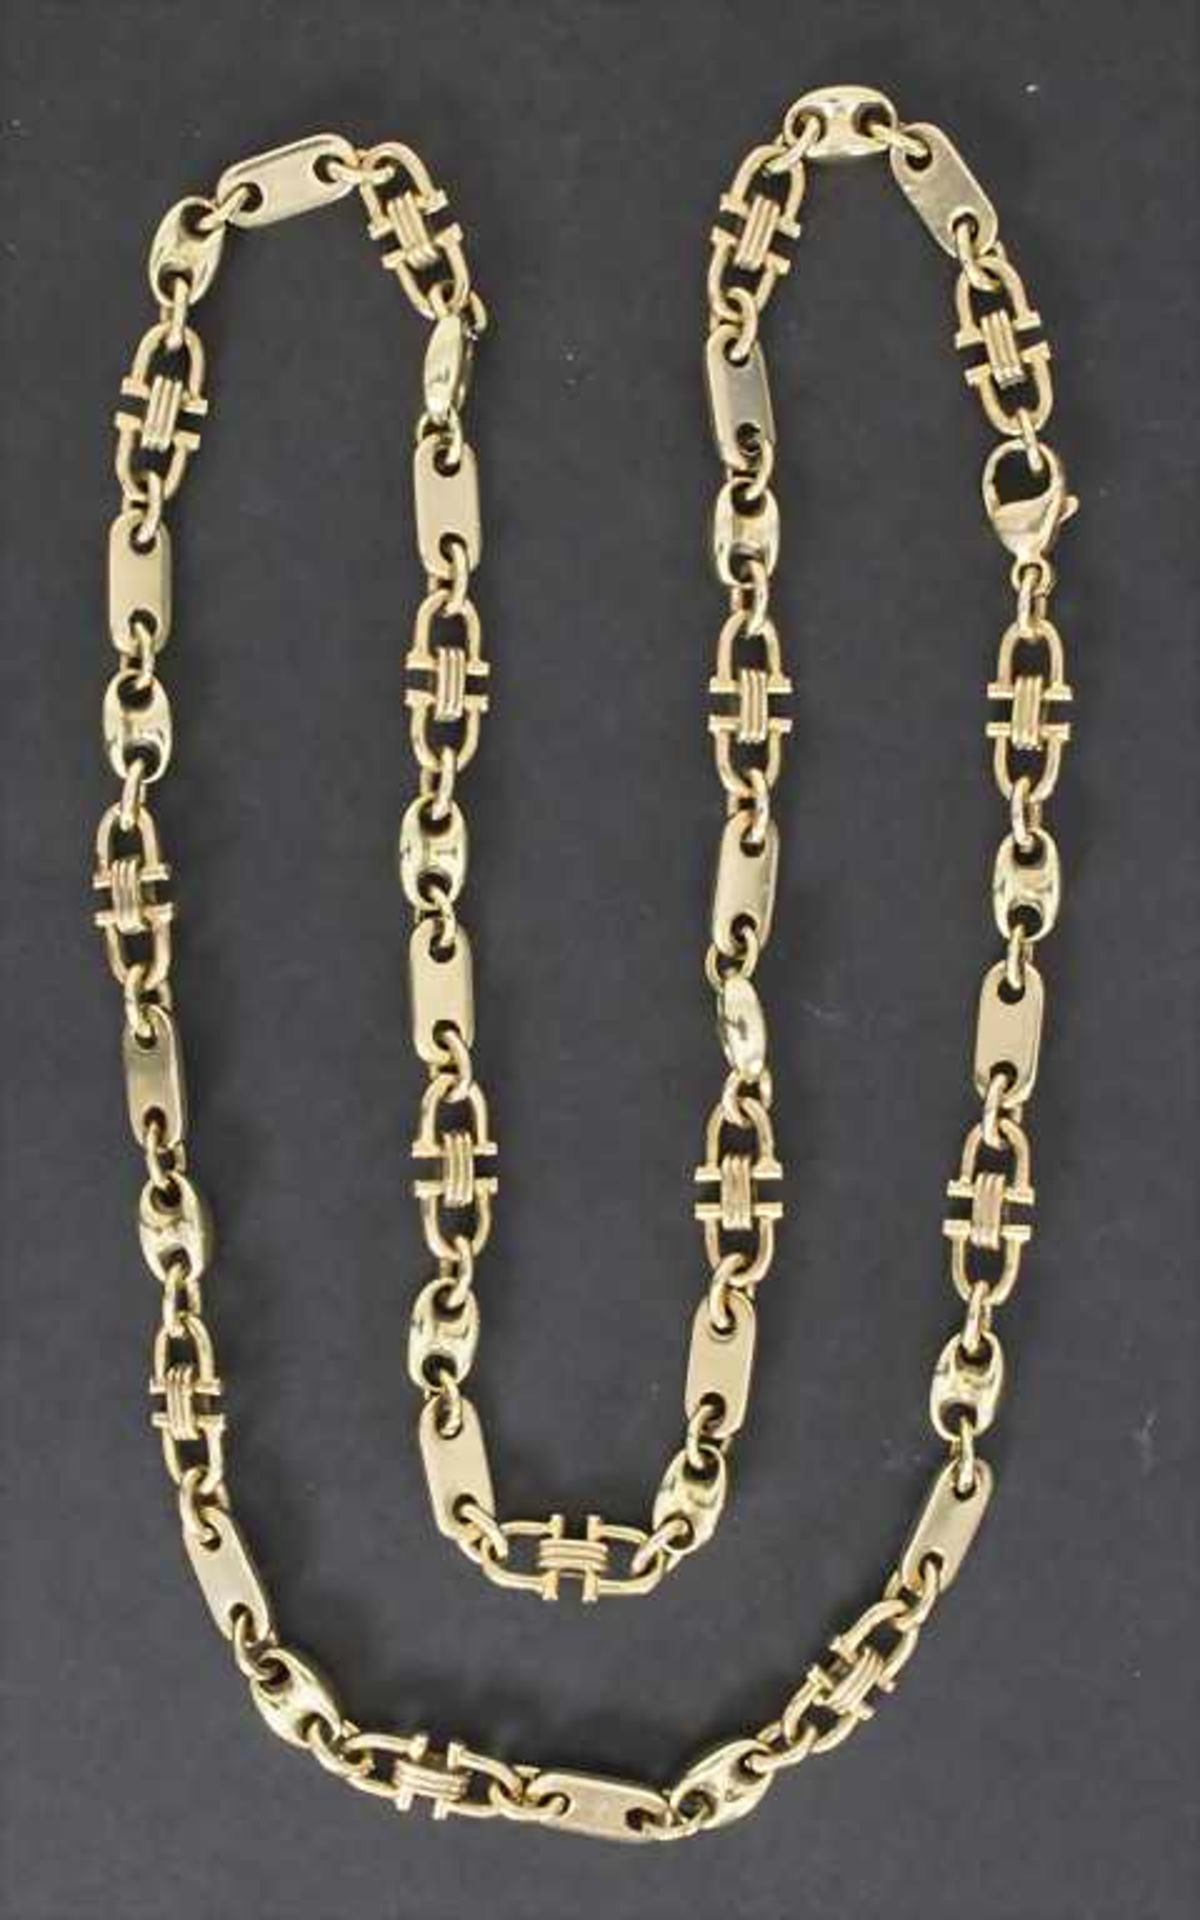 Halskette in Gold / A necklace in goldMaterial: Gold Au 585/00 14 Kt,Länge: 60 cm,Gewicht: 55,0 g,